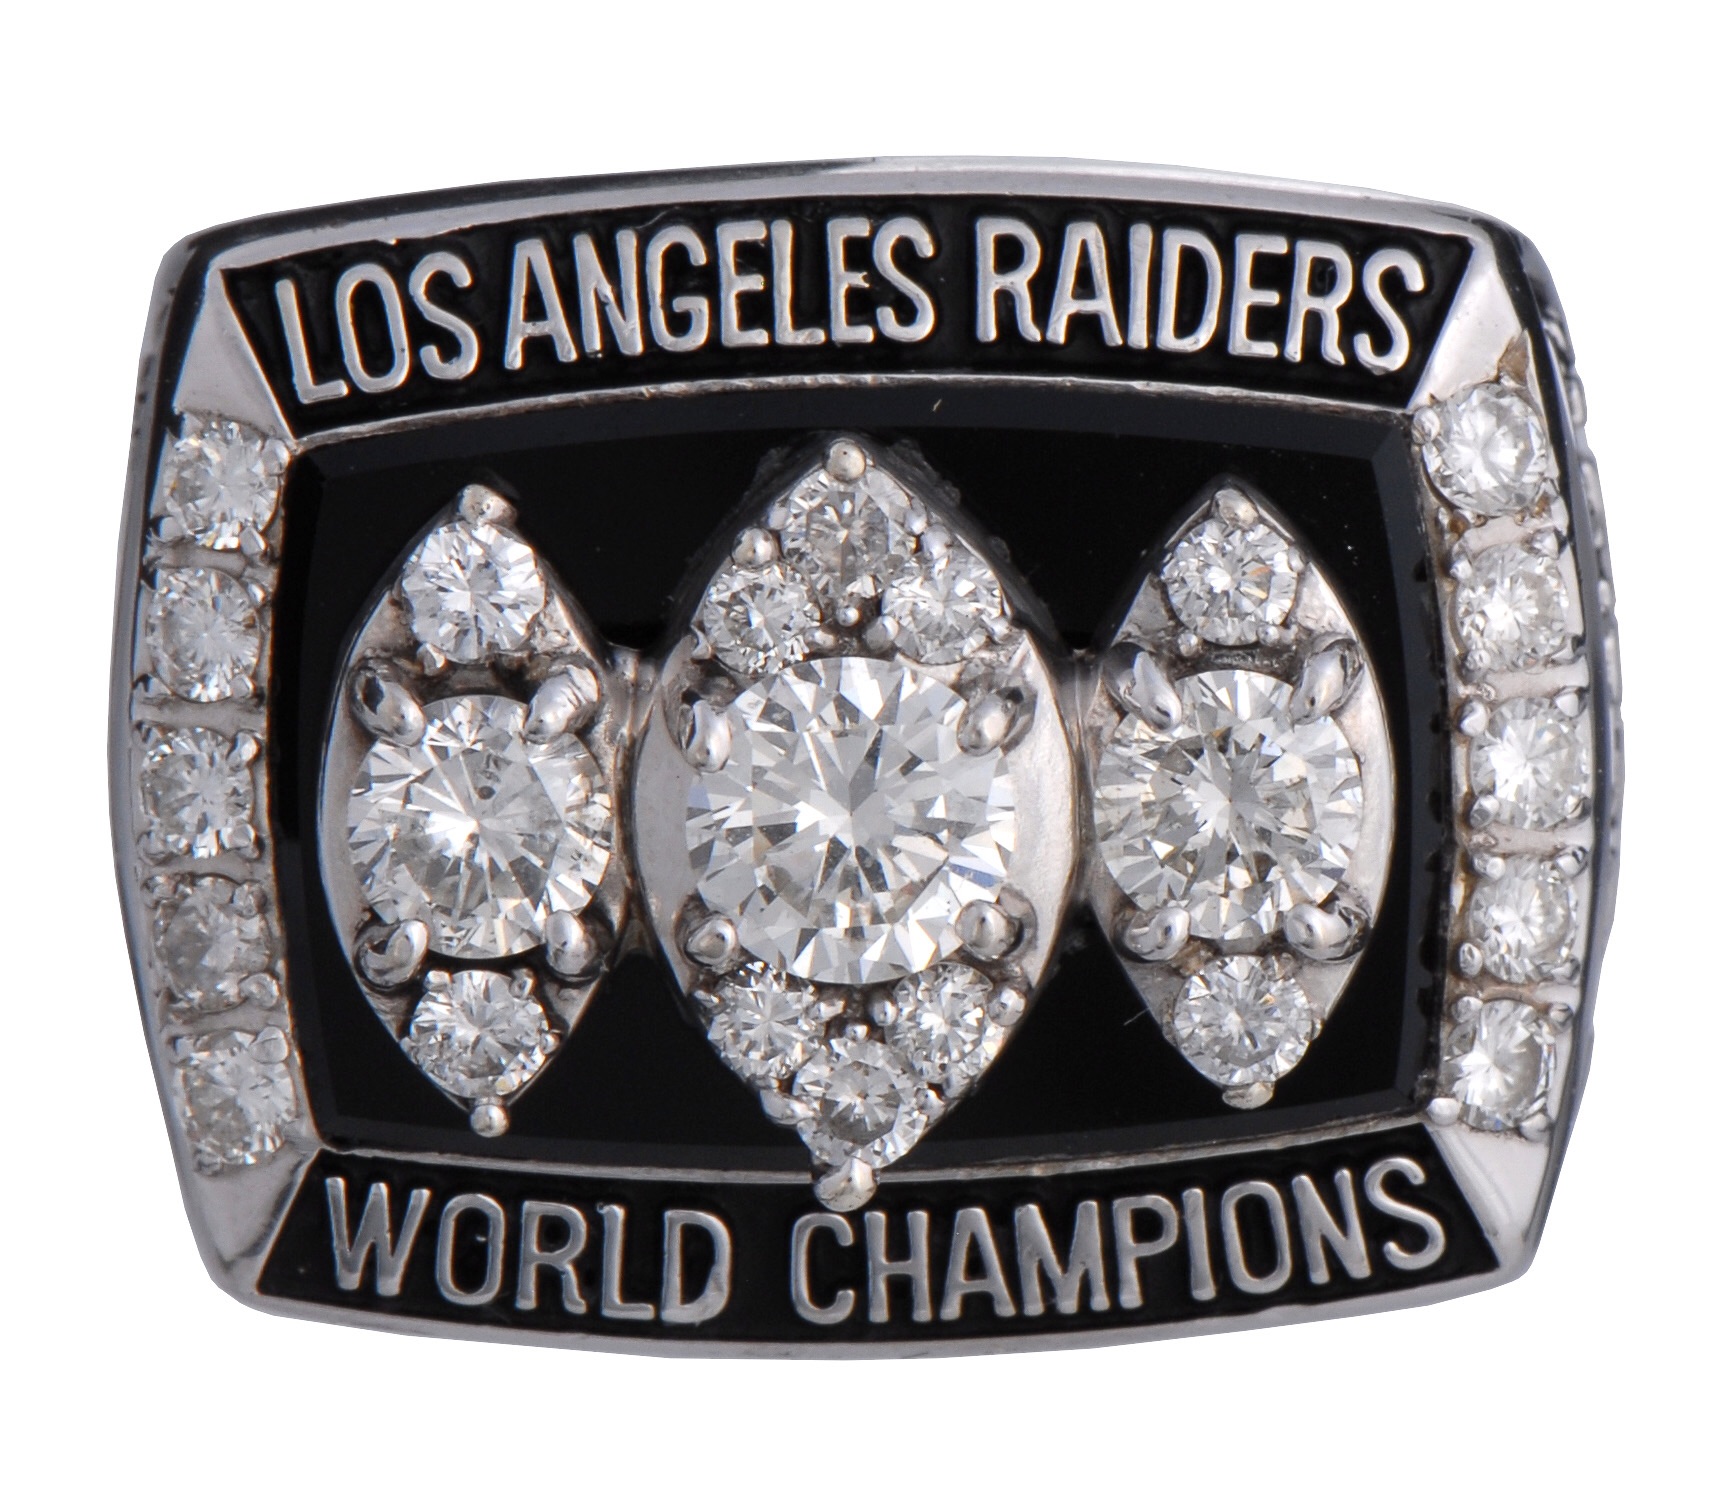 Raiders ring